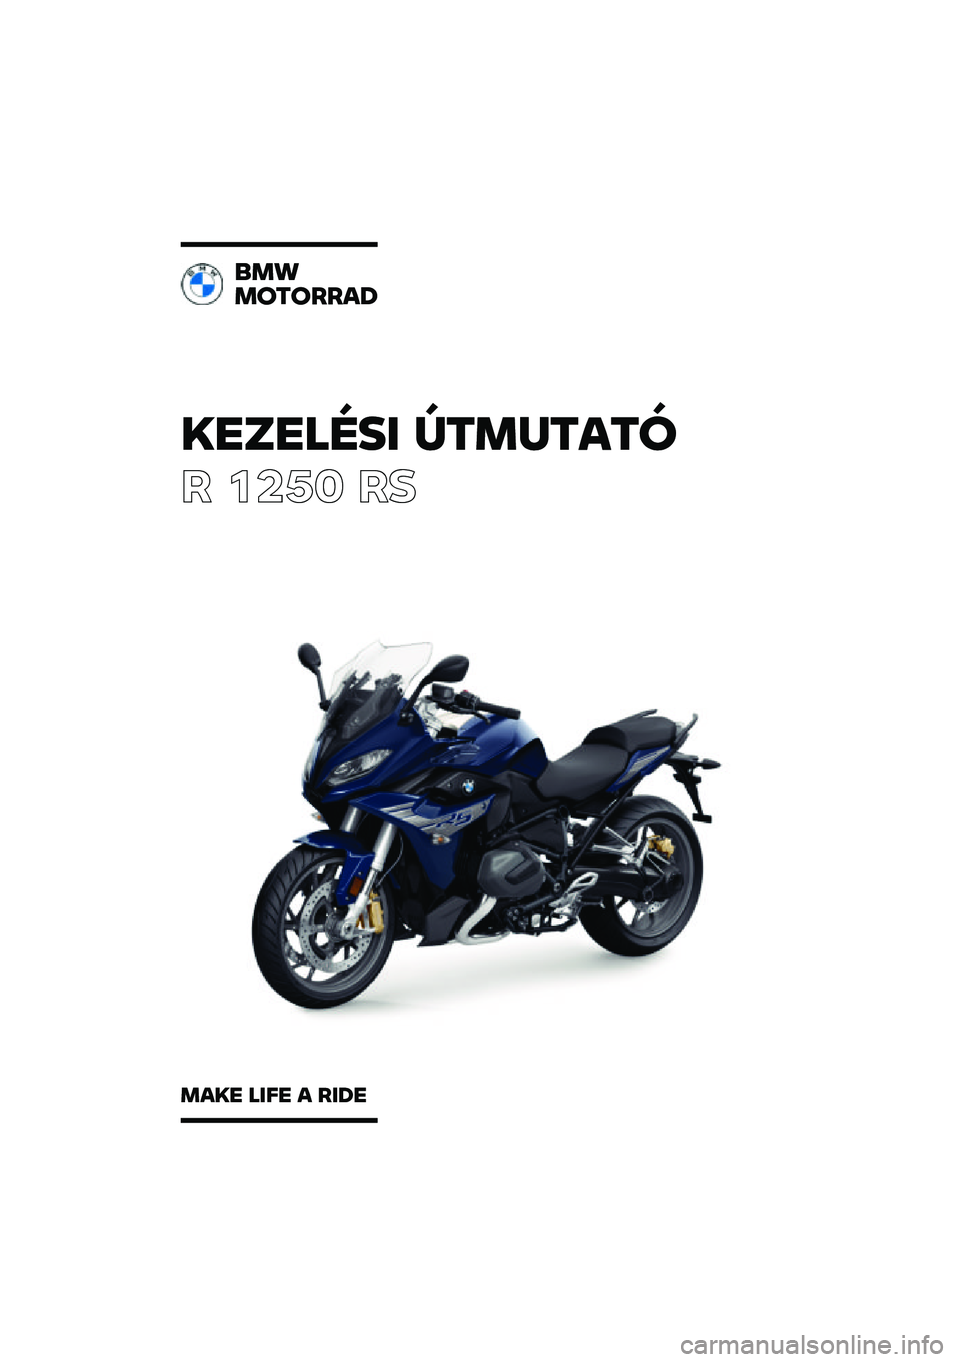 BMW MOTORRAD R 1250 RS 2021  Kezelési útmutató (in Hungarian) �������\b�	 �
�\f�
��\f��\f�
� ����	 ��
��
�
�
��\f�����
�
��� ��	�� � ��	�� 